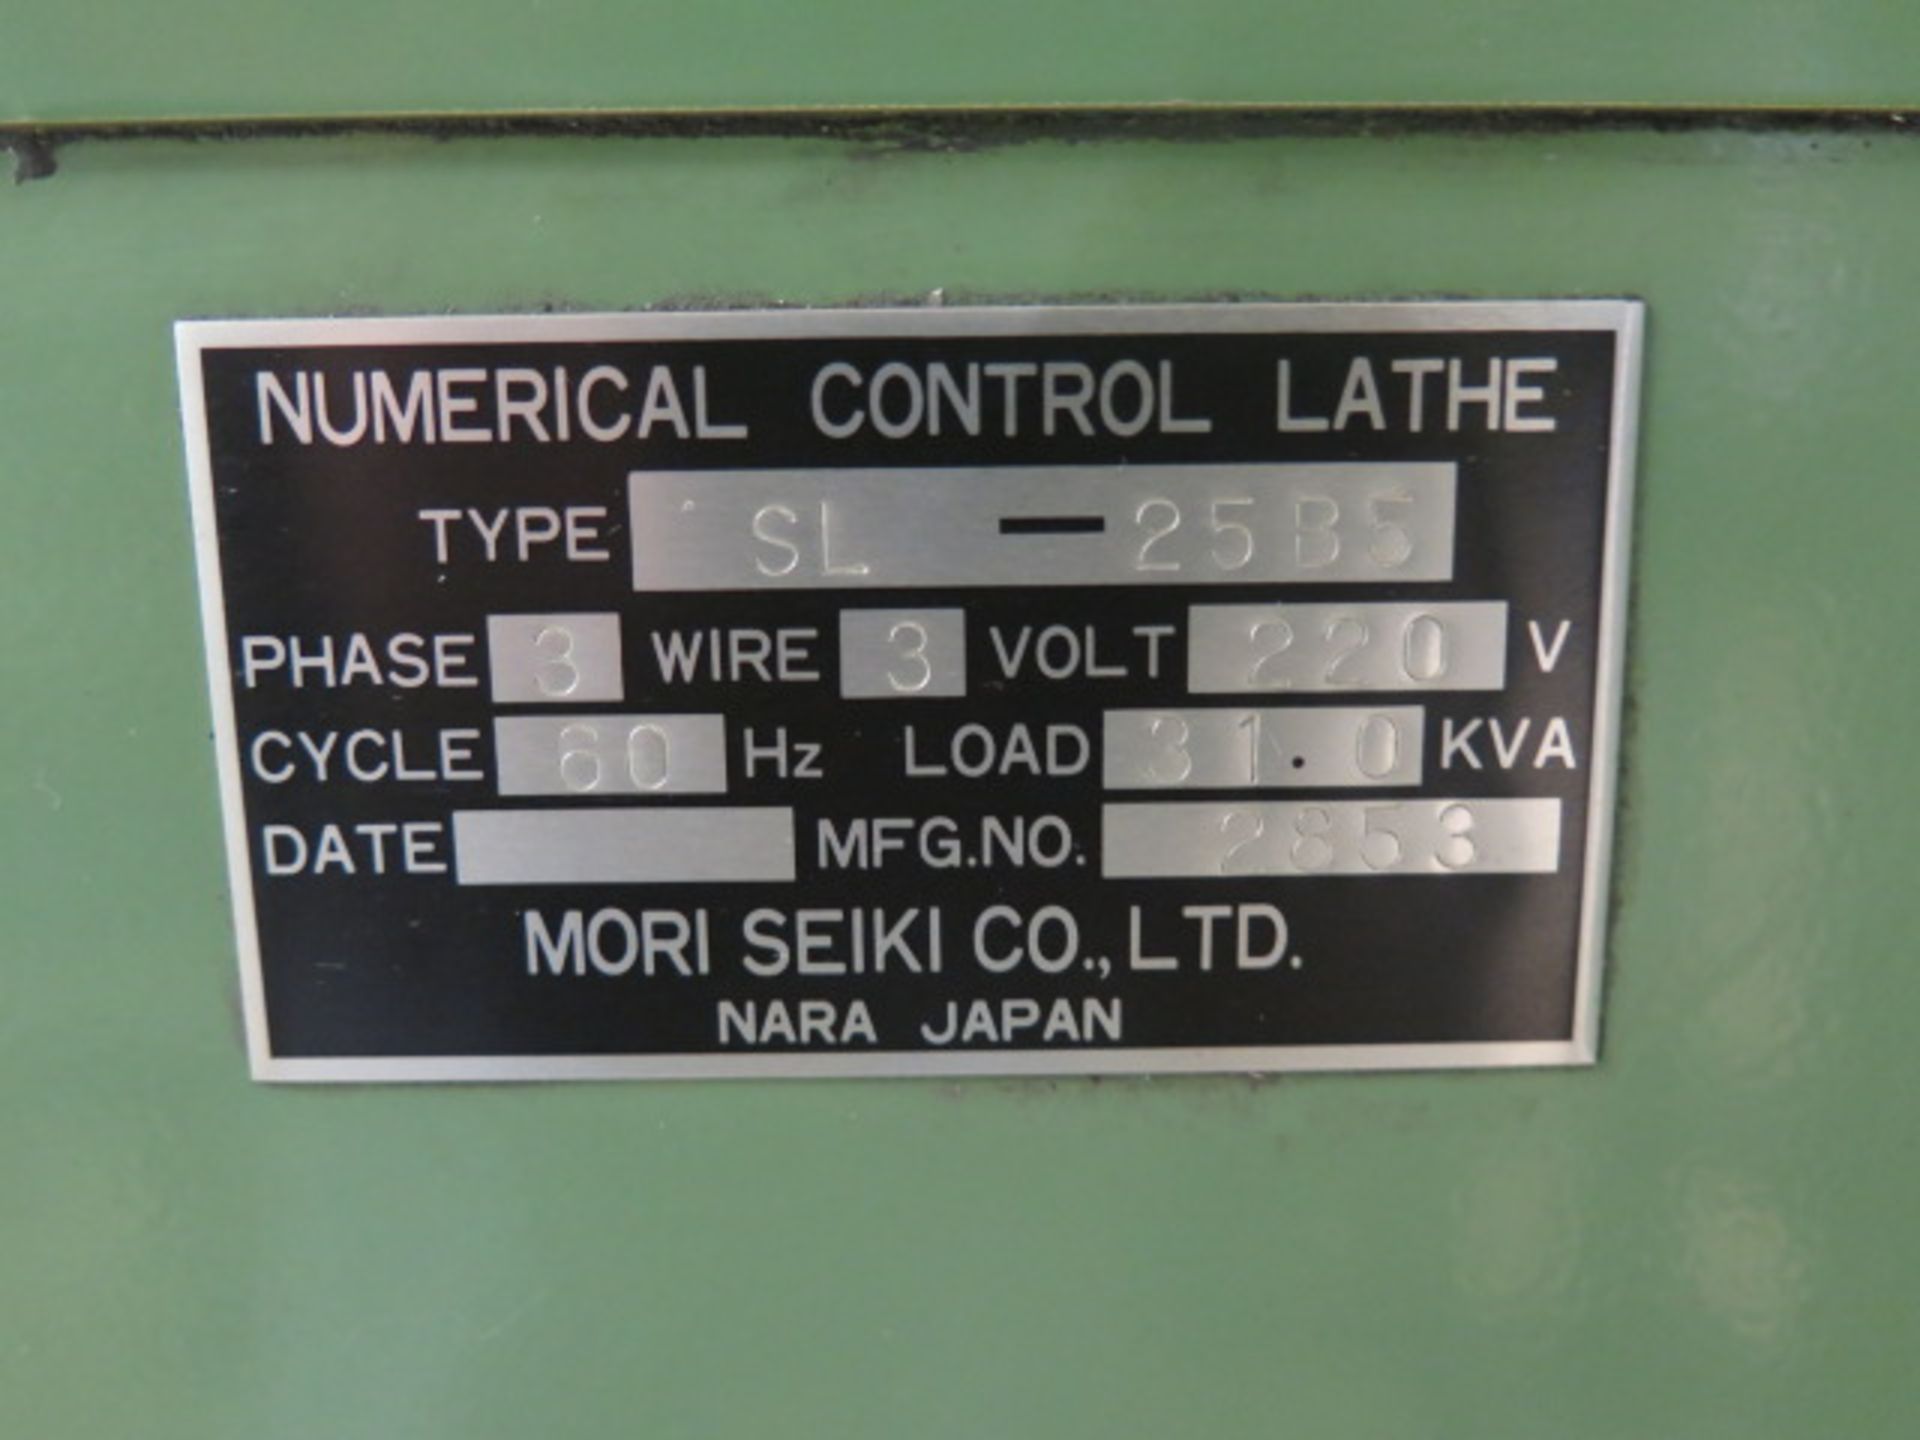 Mori Seiki SL-25B5 CNC Turning Center s/n 2853 w/ Fanuc Series 10T Controls, 10-Station Turret, - Image 10 of 10